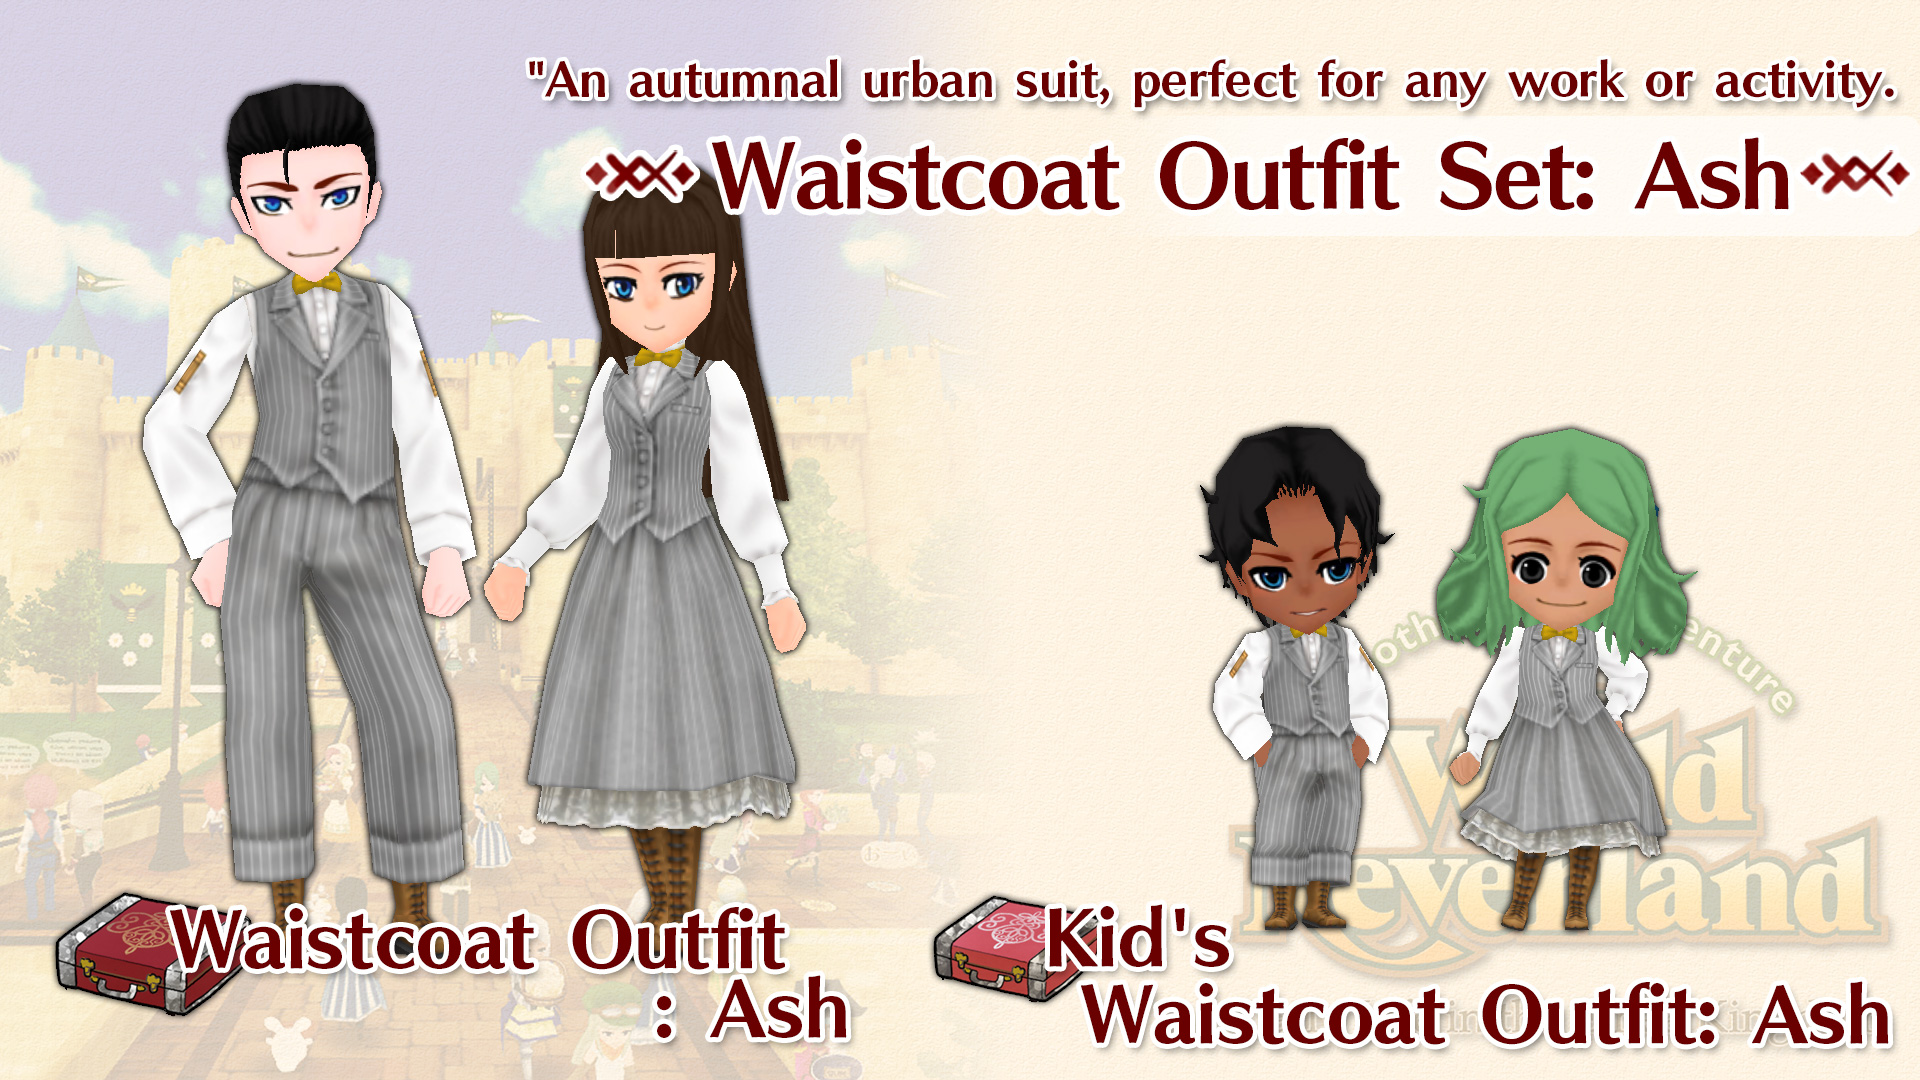 Waistcoat Outfit Set: Ash